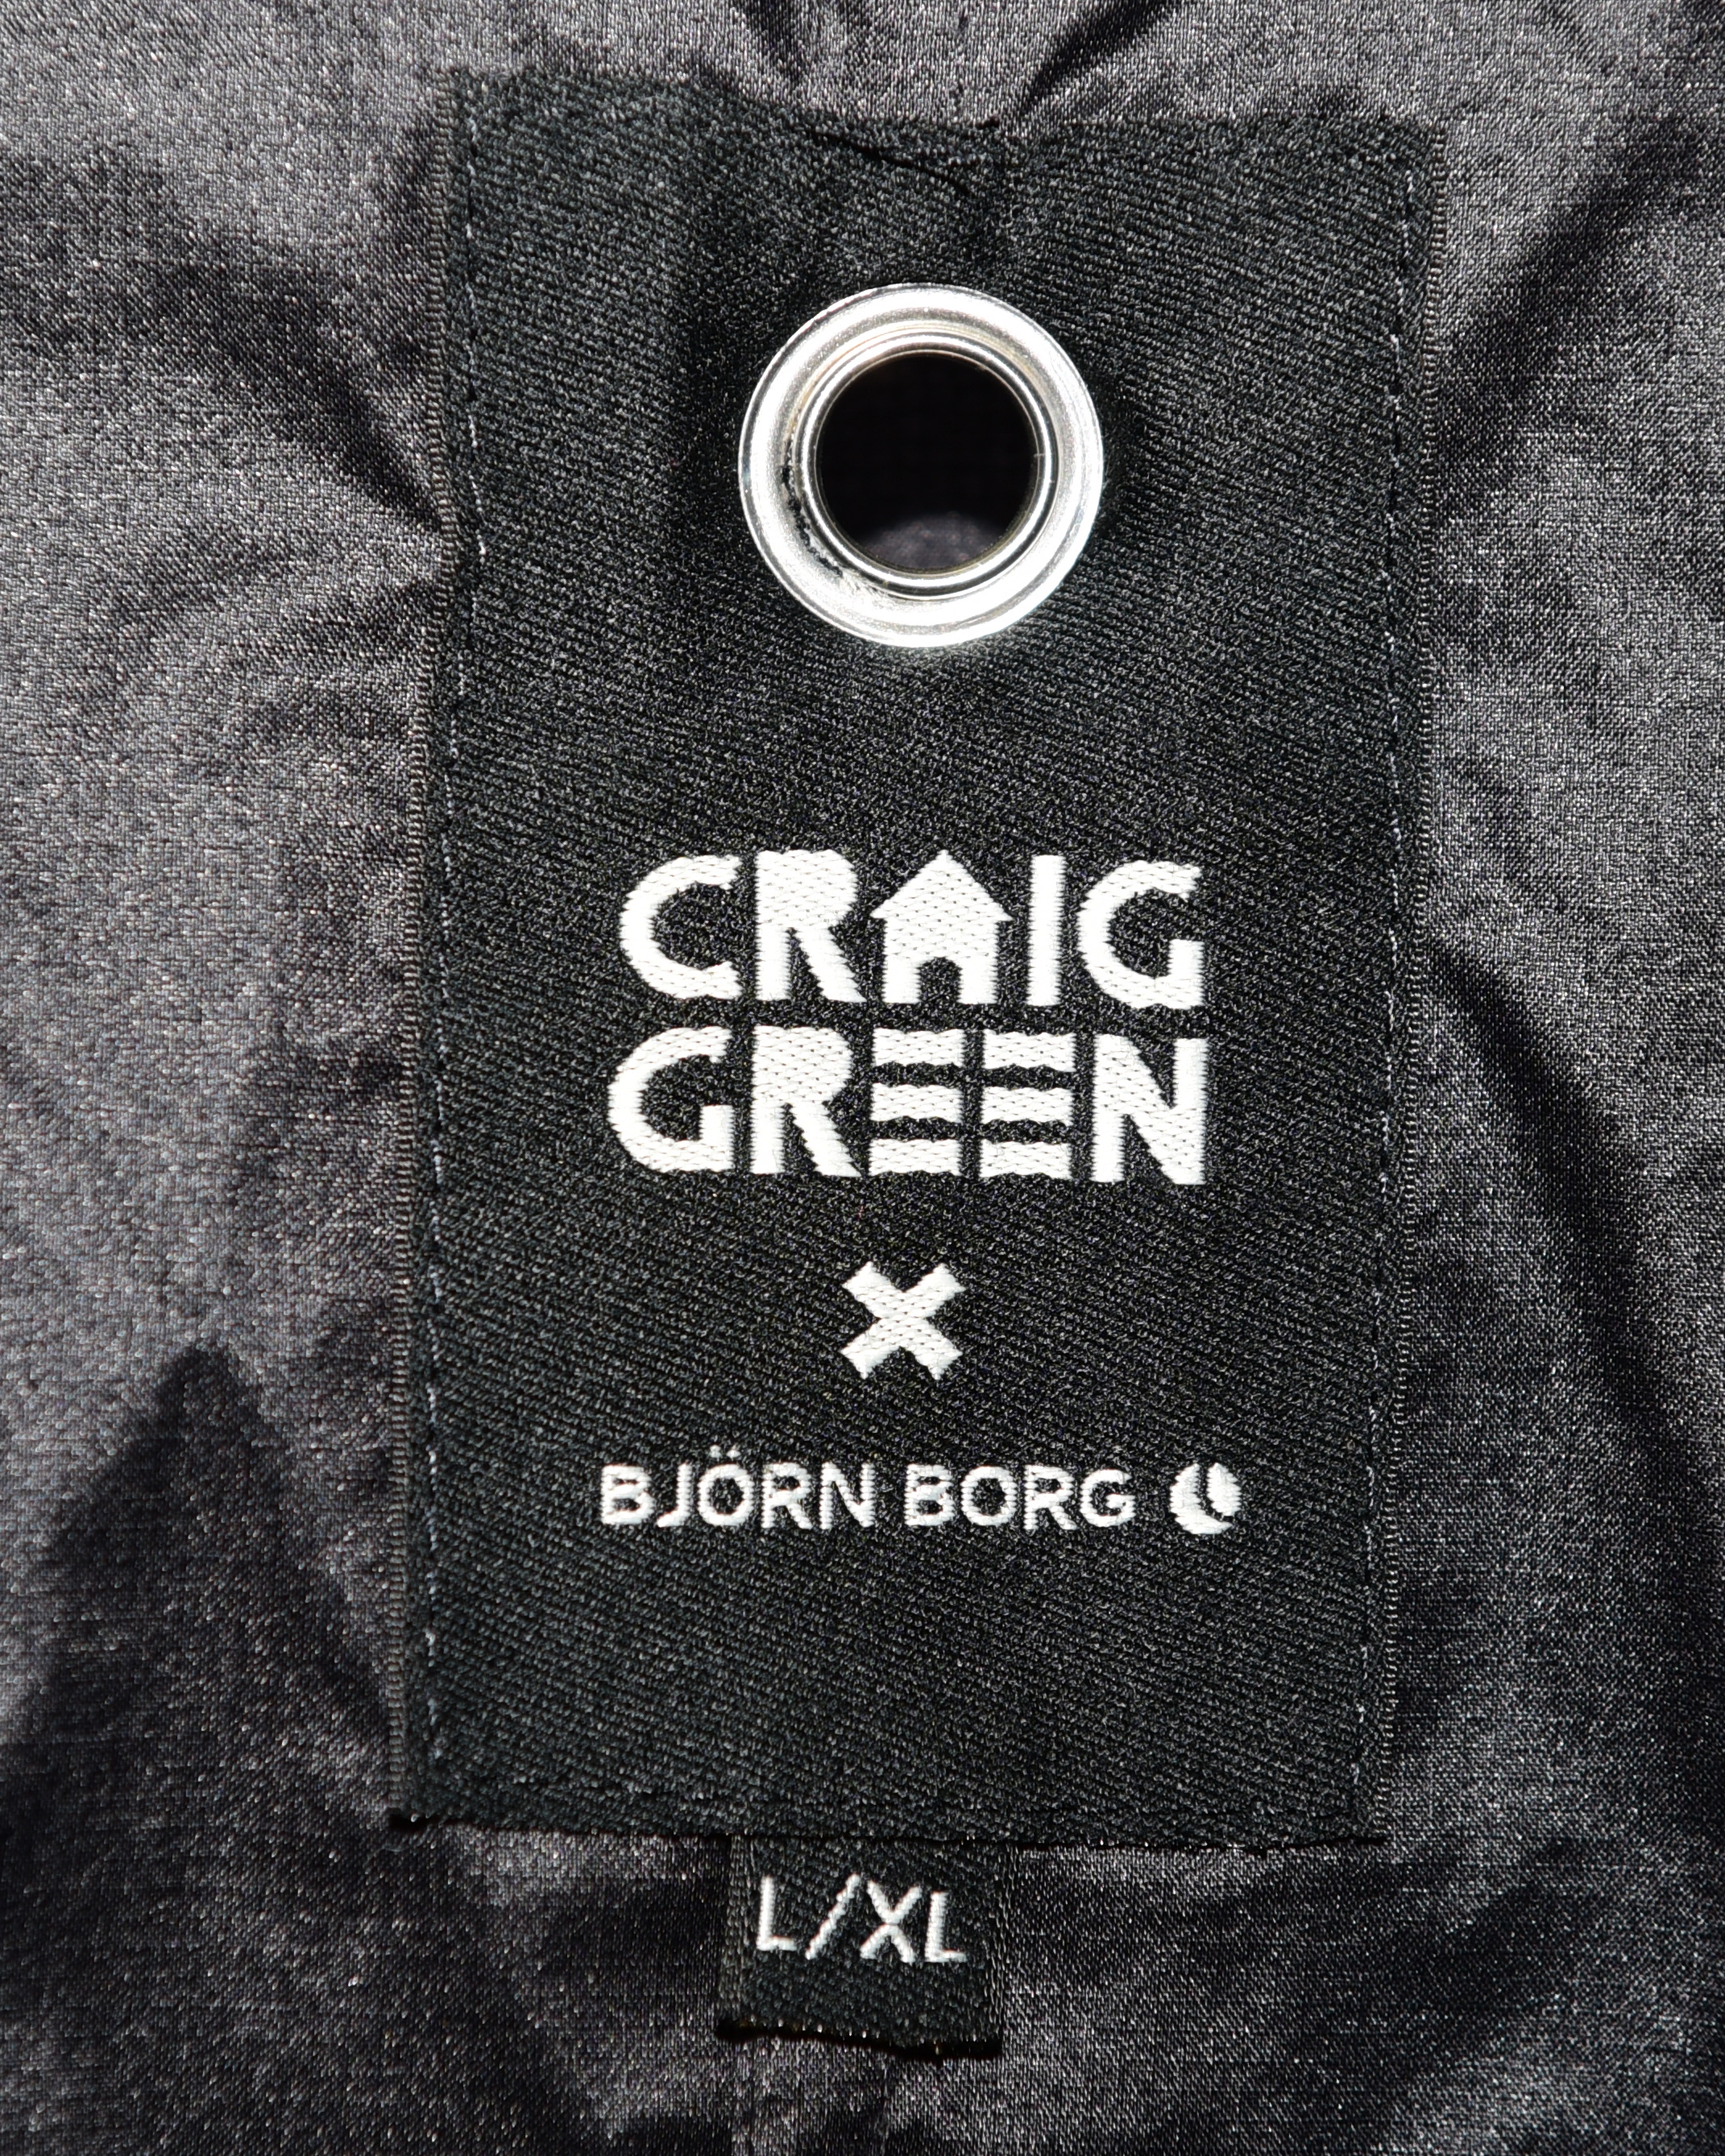 Craig Green Bjorn Borg Green Shell Parka - 11